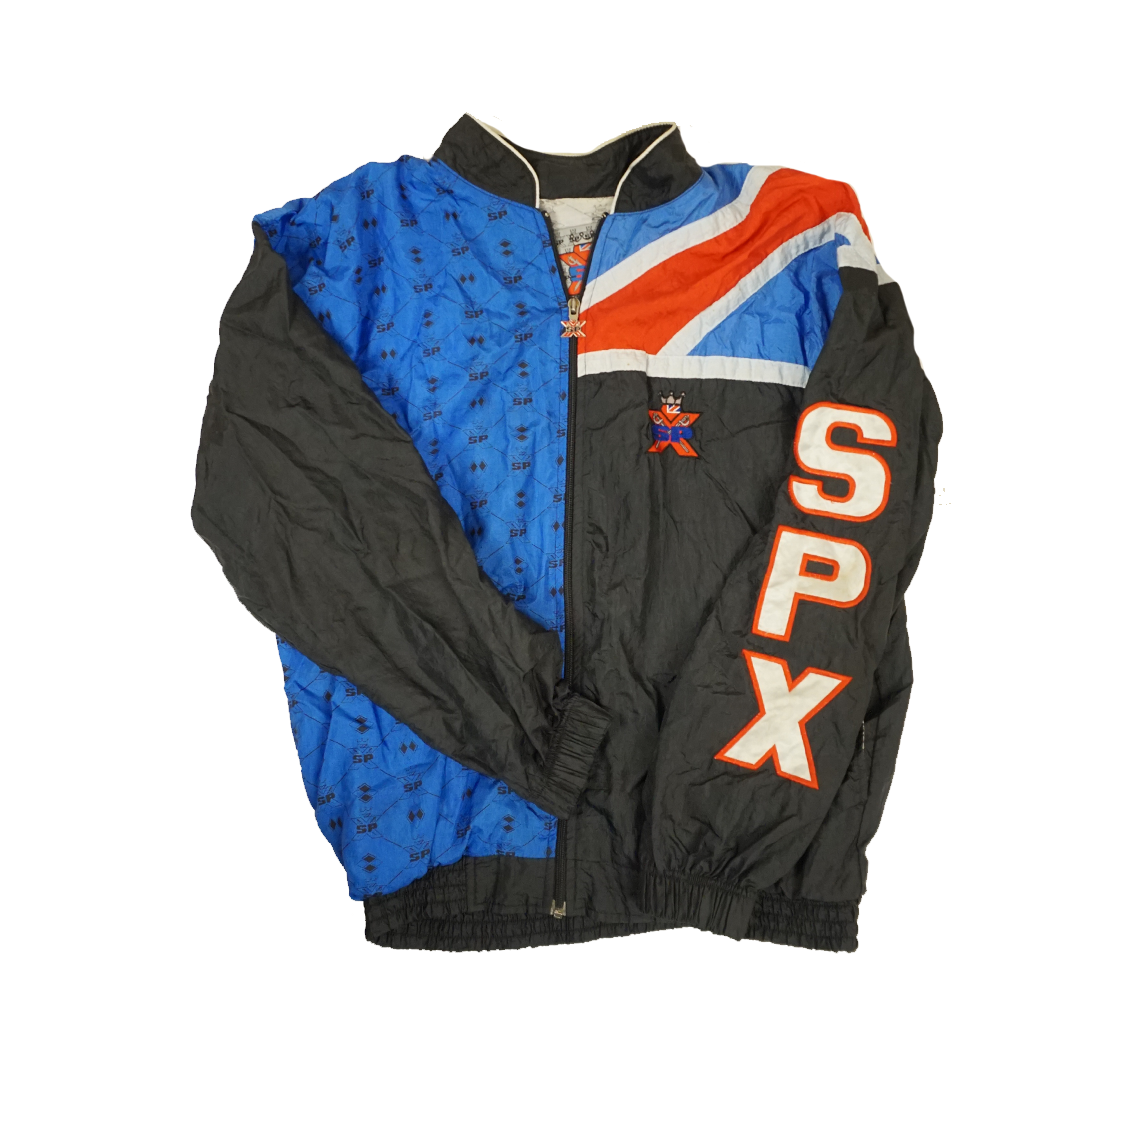 Vintage SPX Jacket